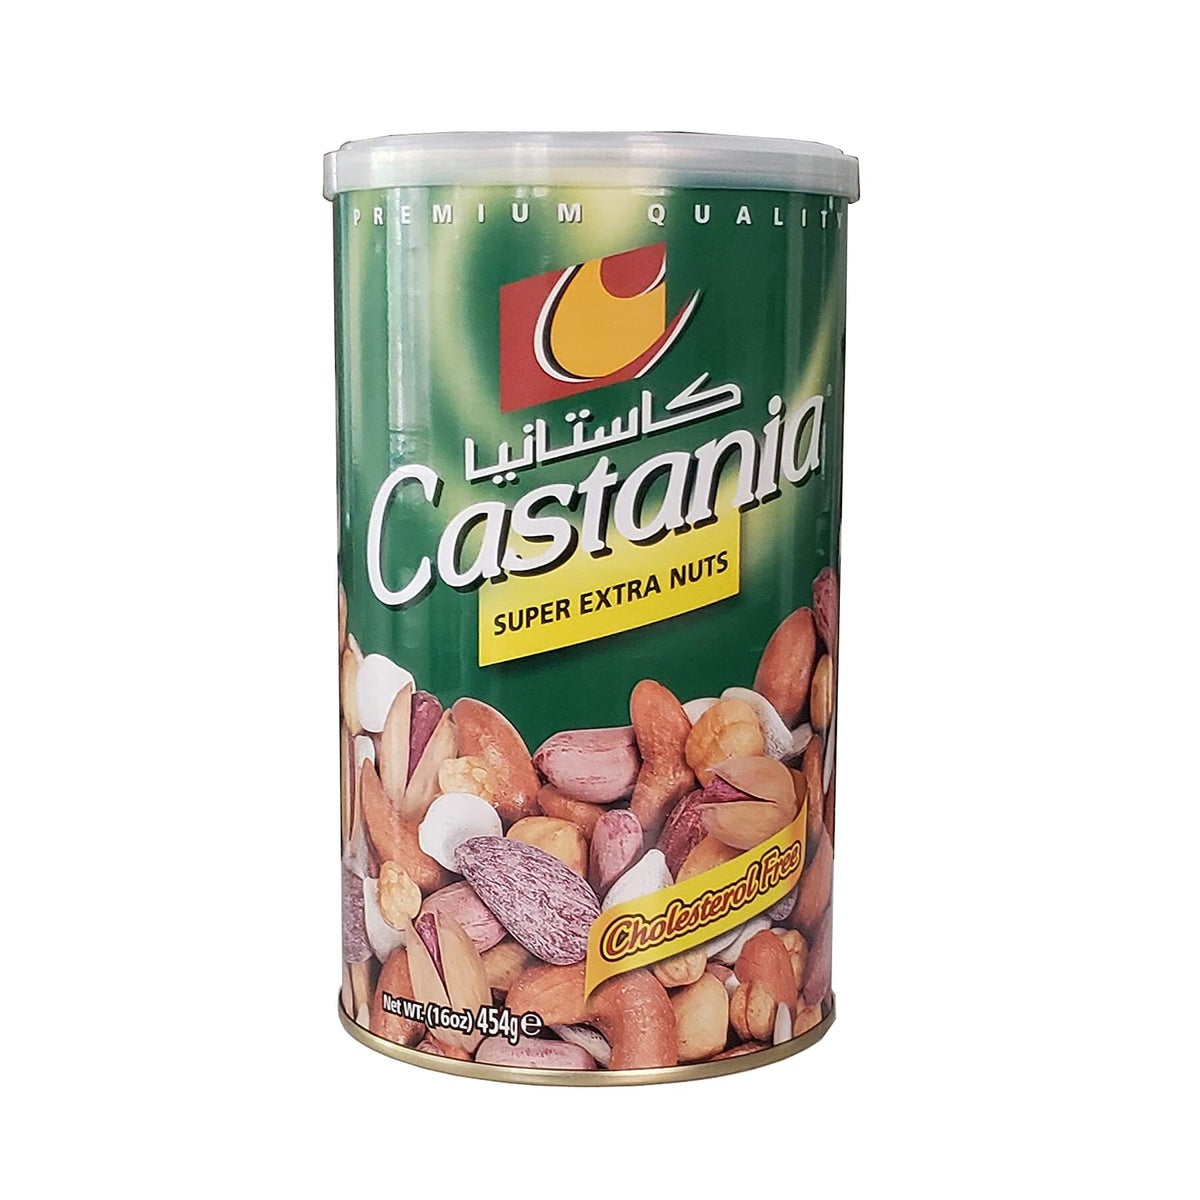 CASTANIA SUPER MIXED NUTS 454G GREEN CAN 